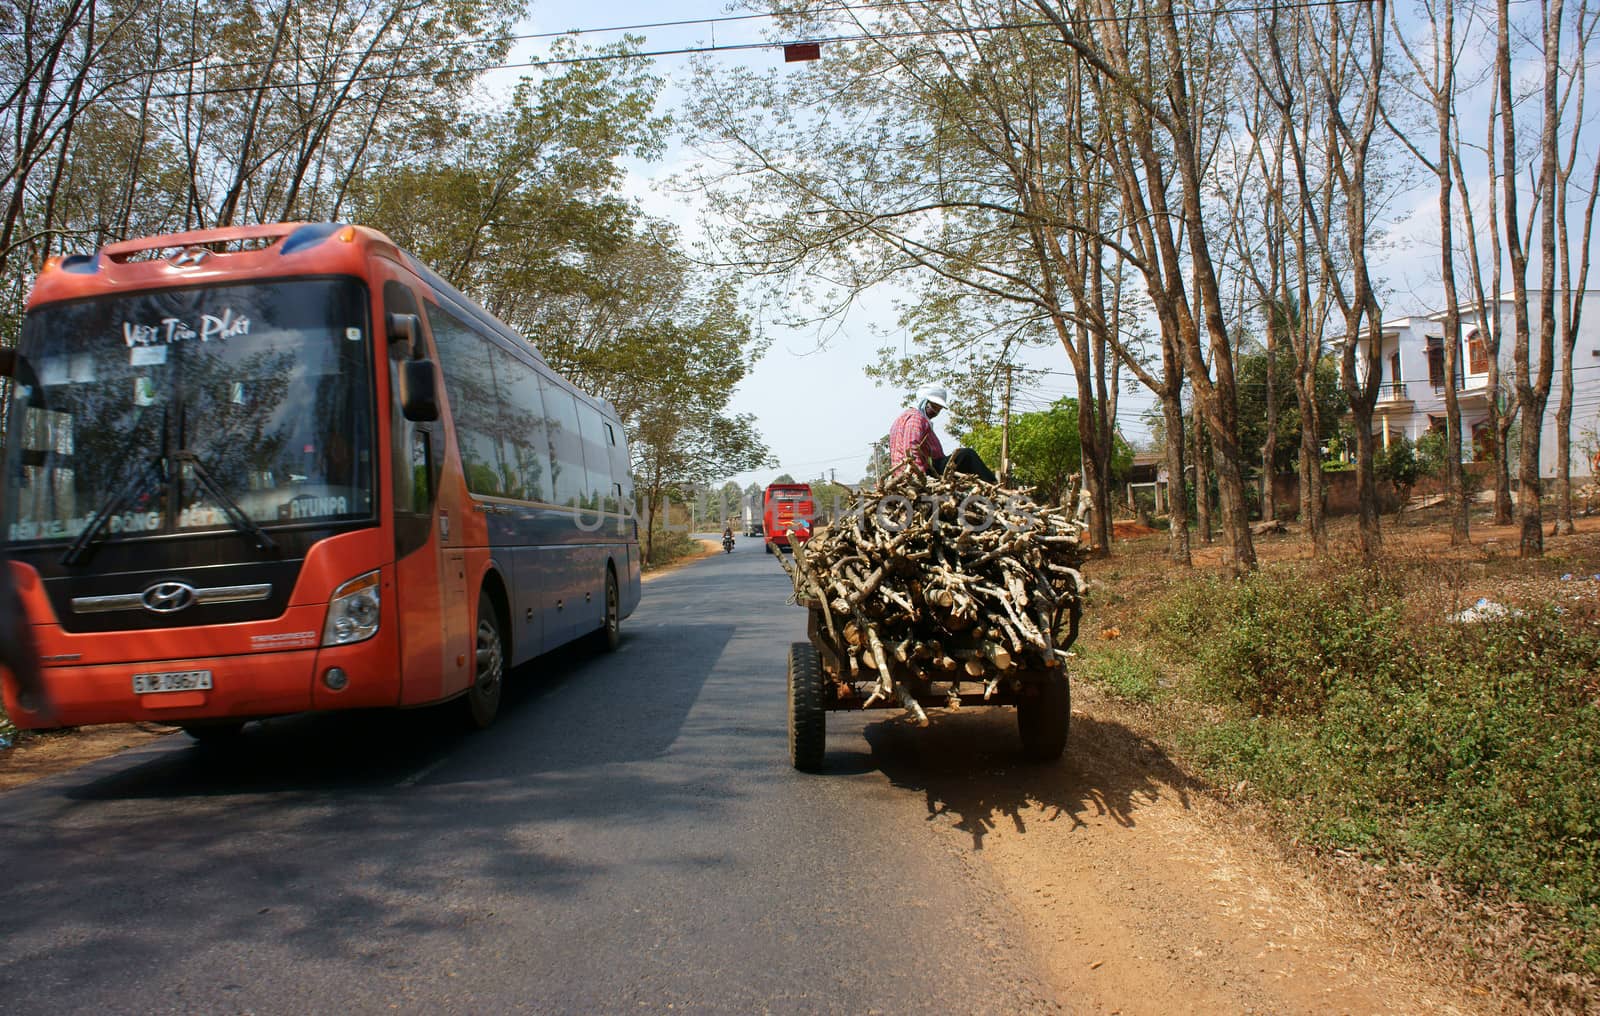 DAKLAK, VIETNAM- FEB 8 Traffic of transport vehicle on highway, the asphalt road pass jungle, passenger car and farm vehicle moving on day, Viet Nam, Feb 8, 2014